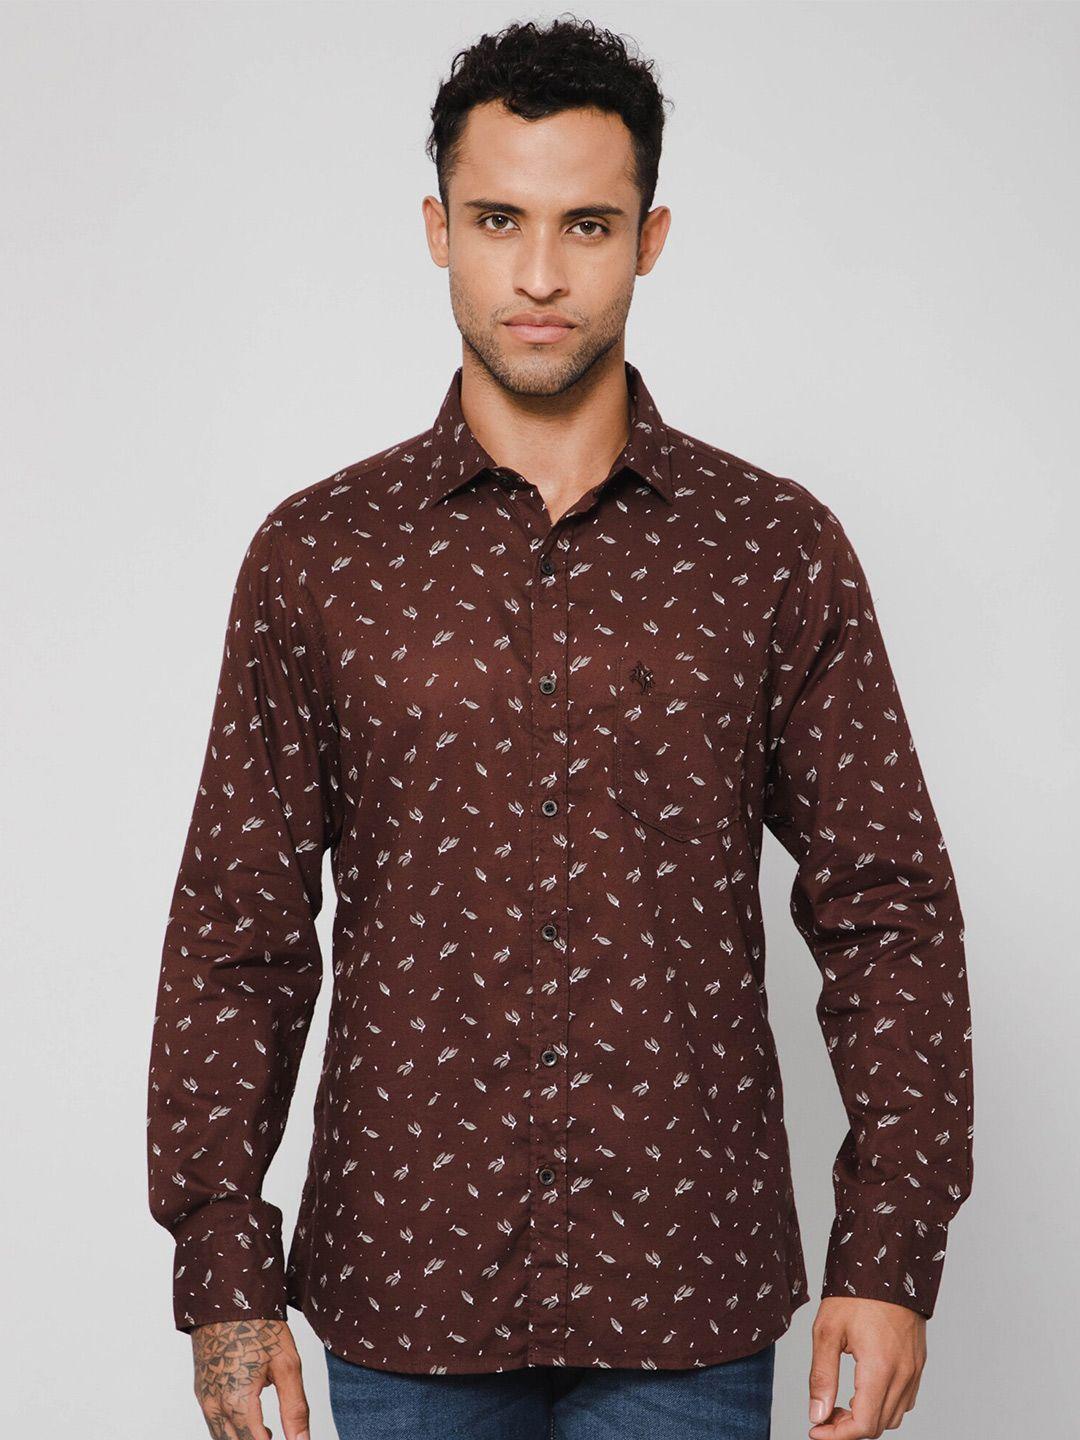 cantabil-floral-printed-spread-collar-cotton-casual-shirt